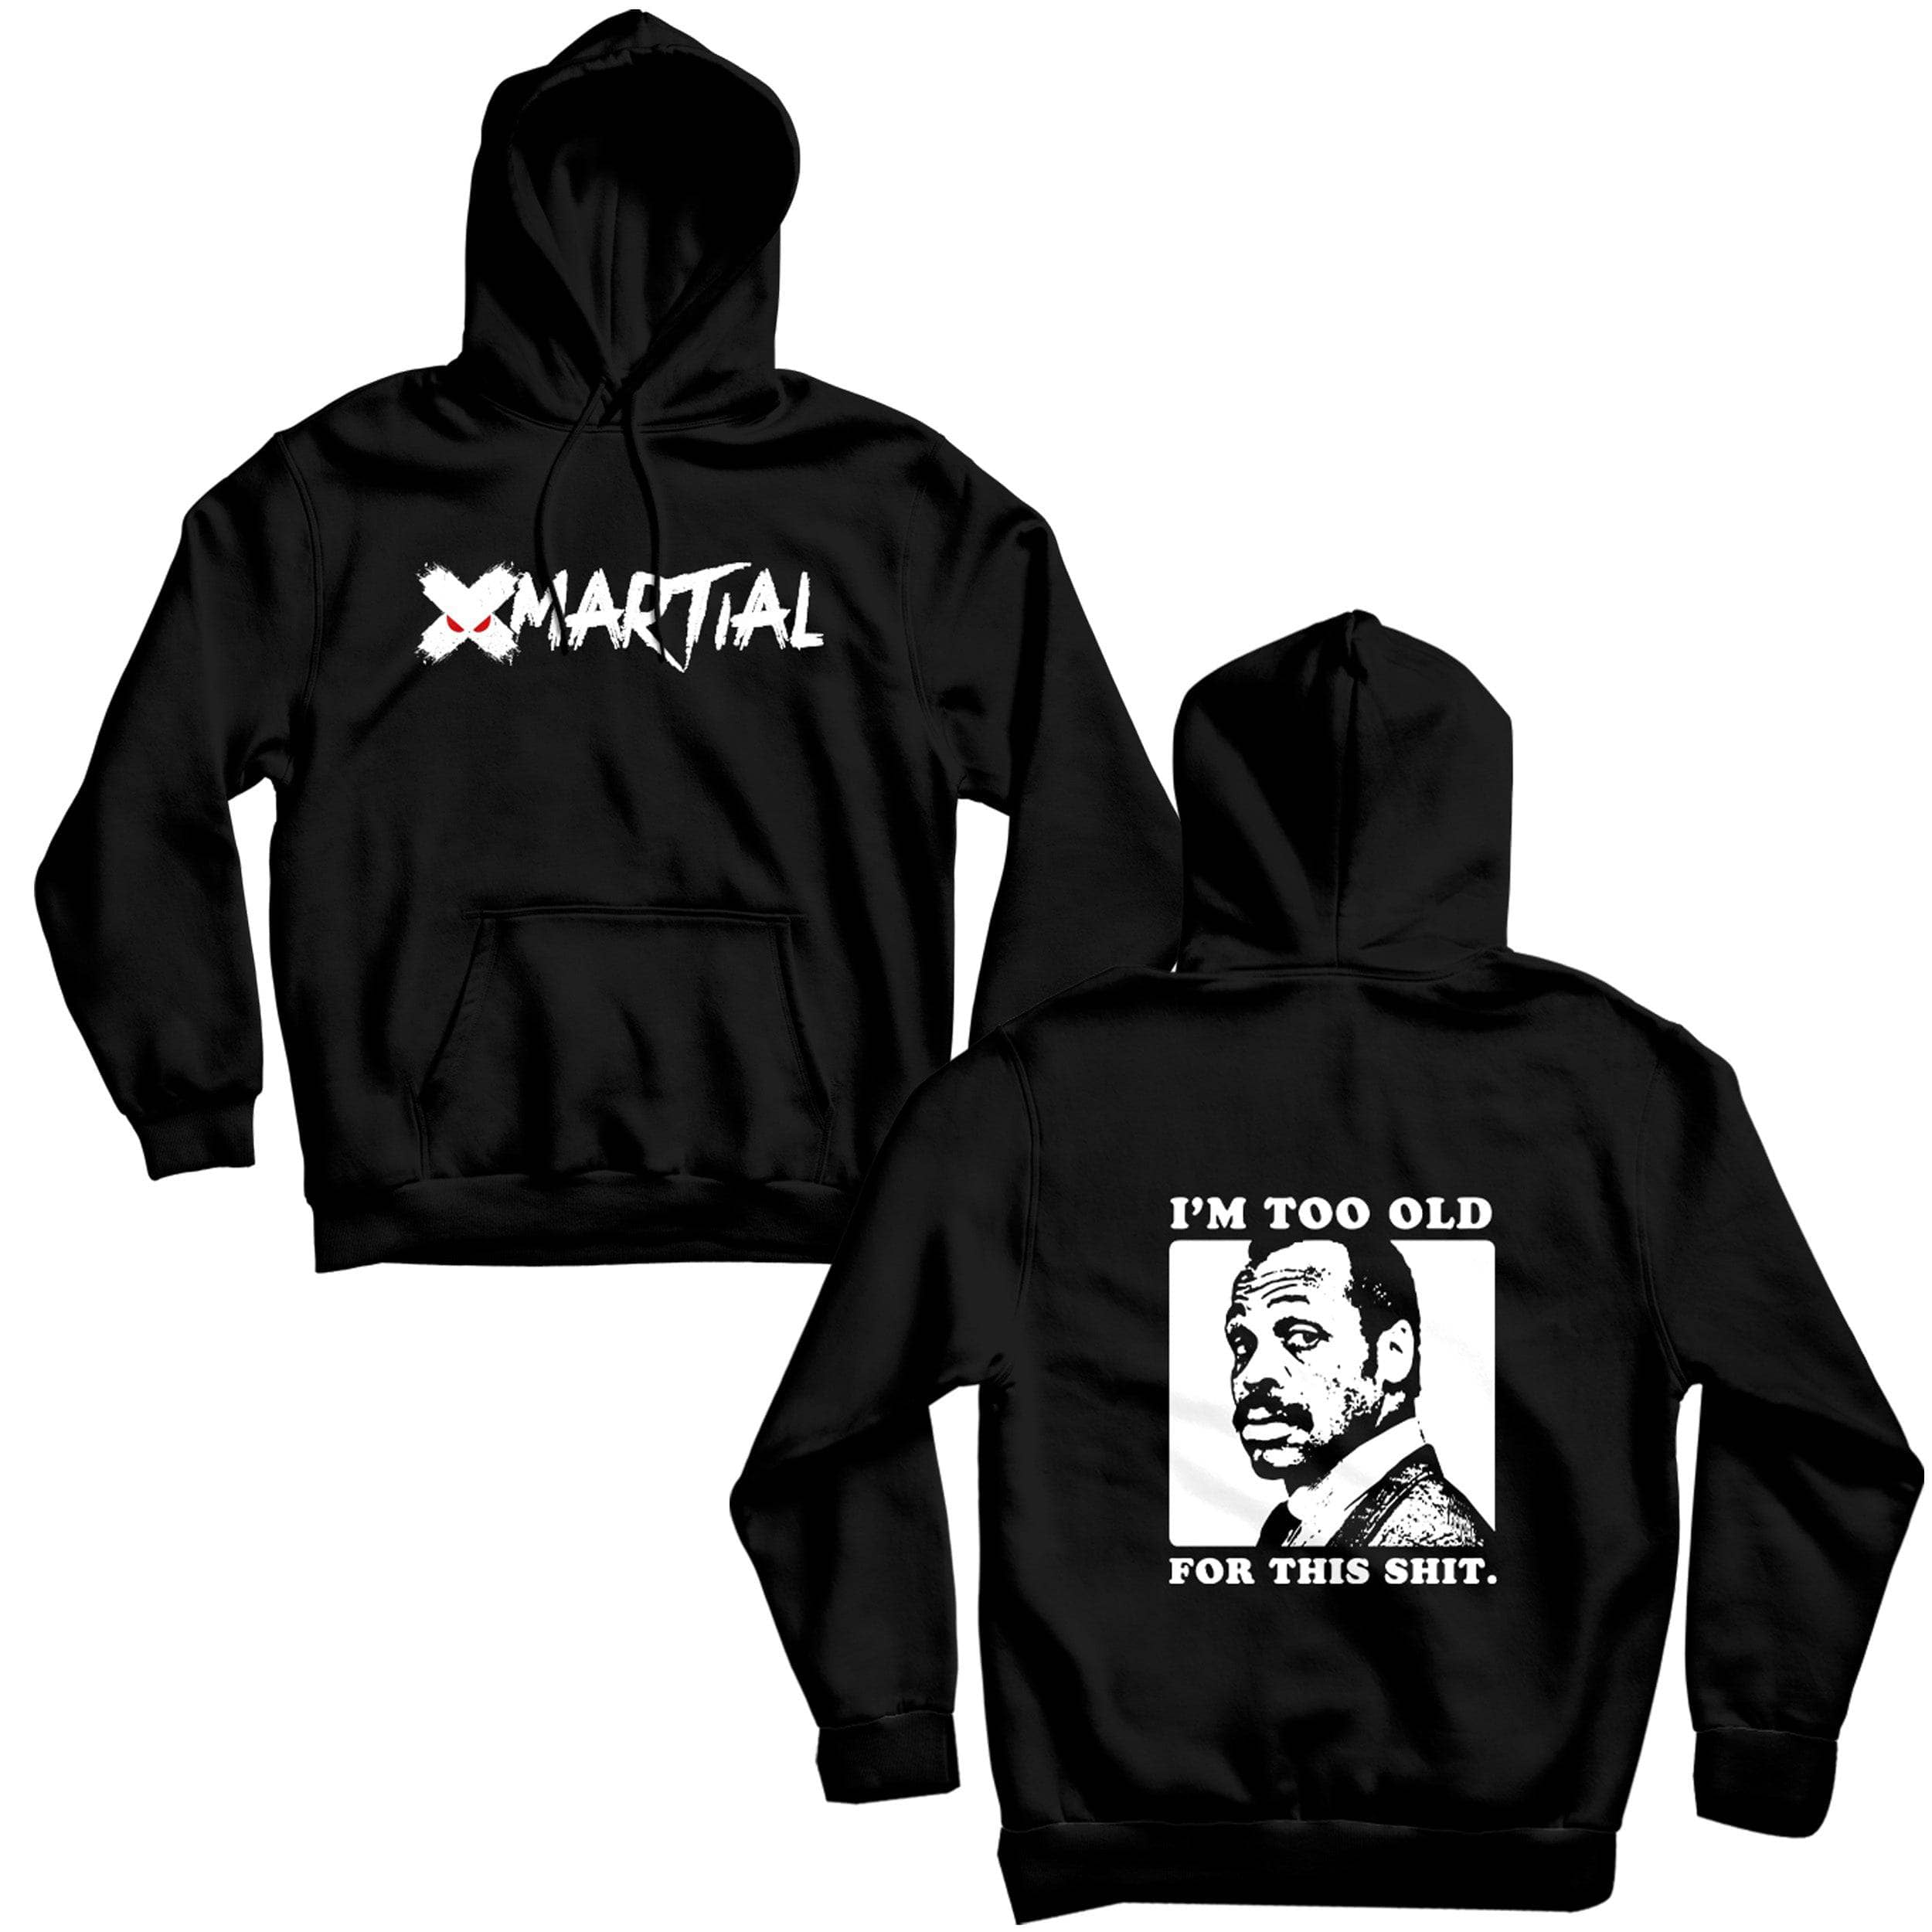 Y2K Shirts & Hoodie - XMARTIAL